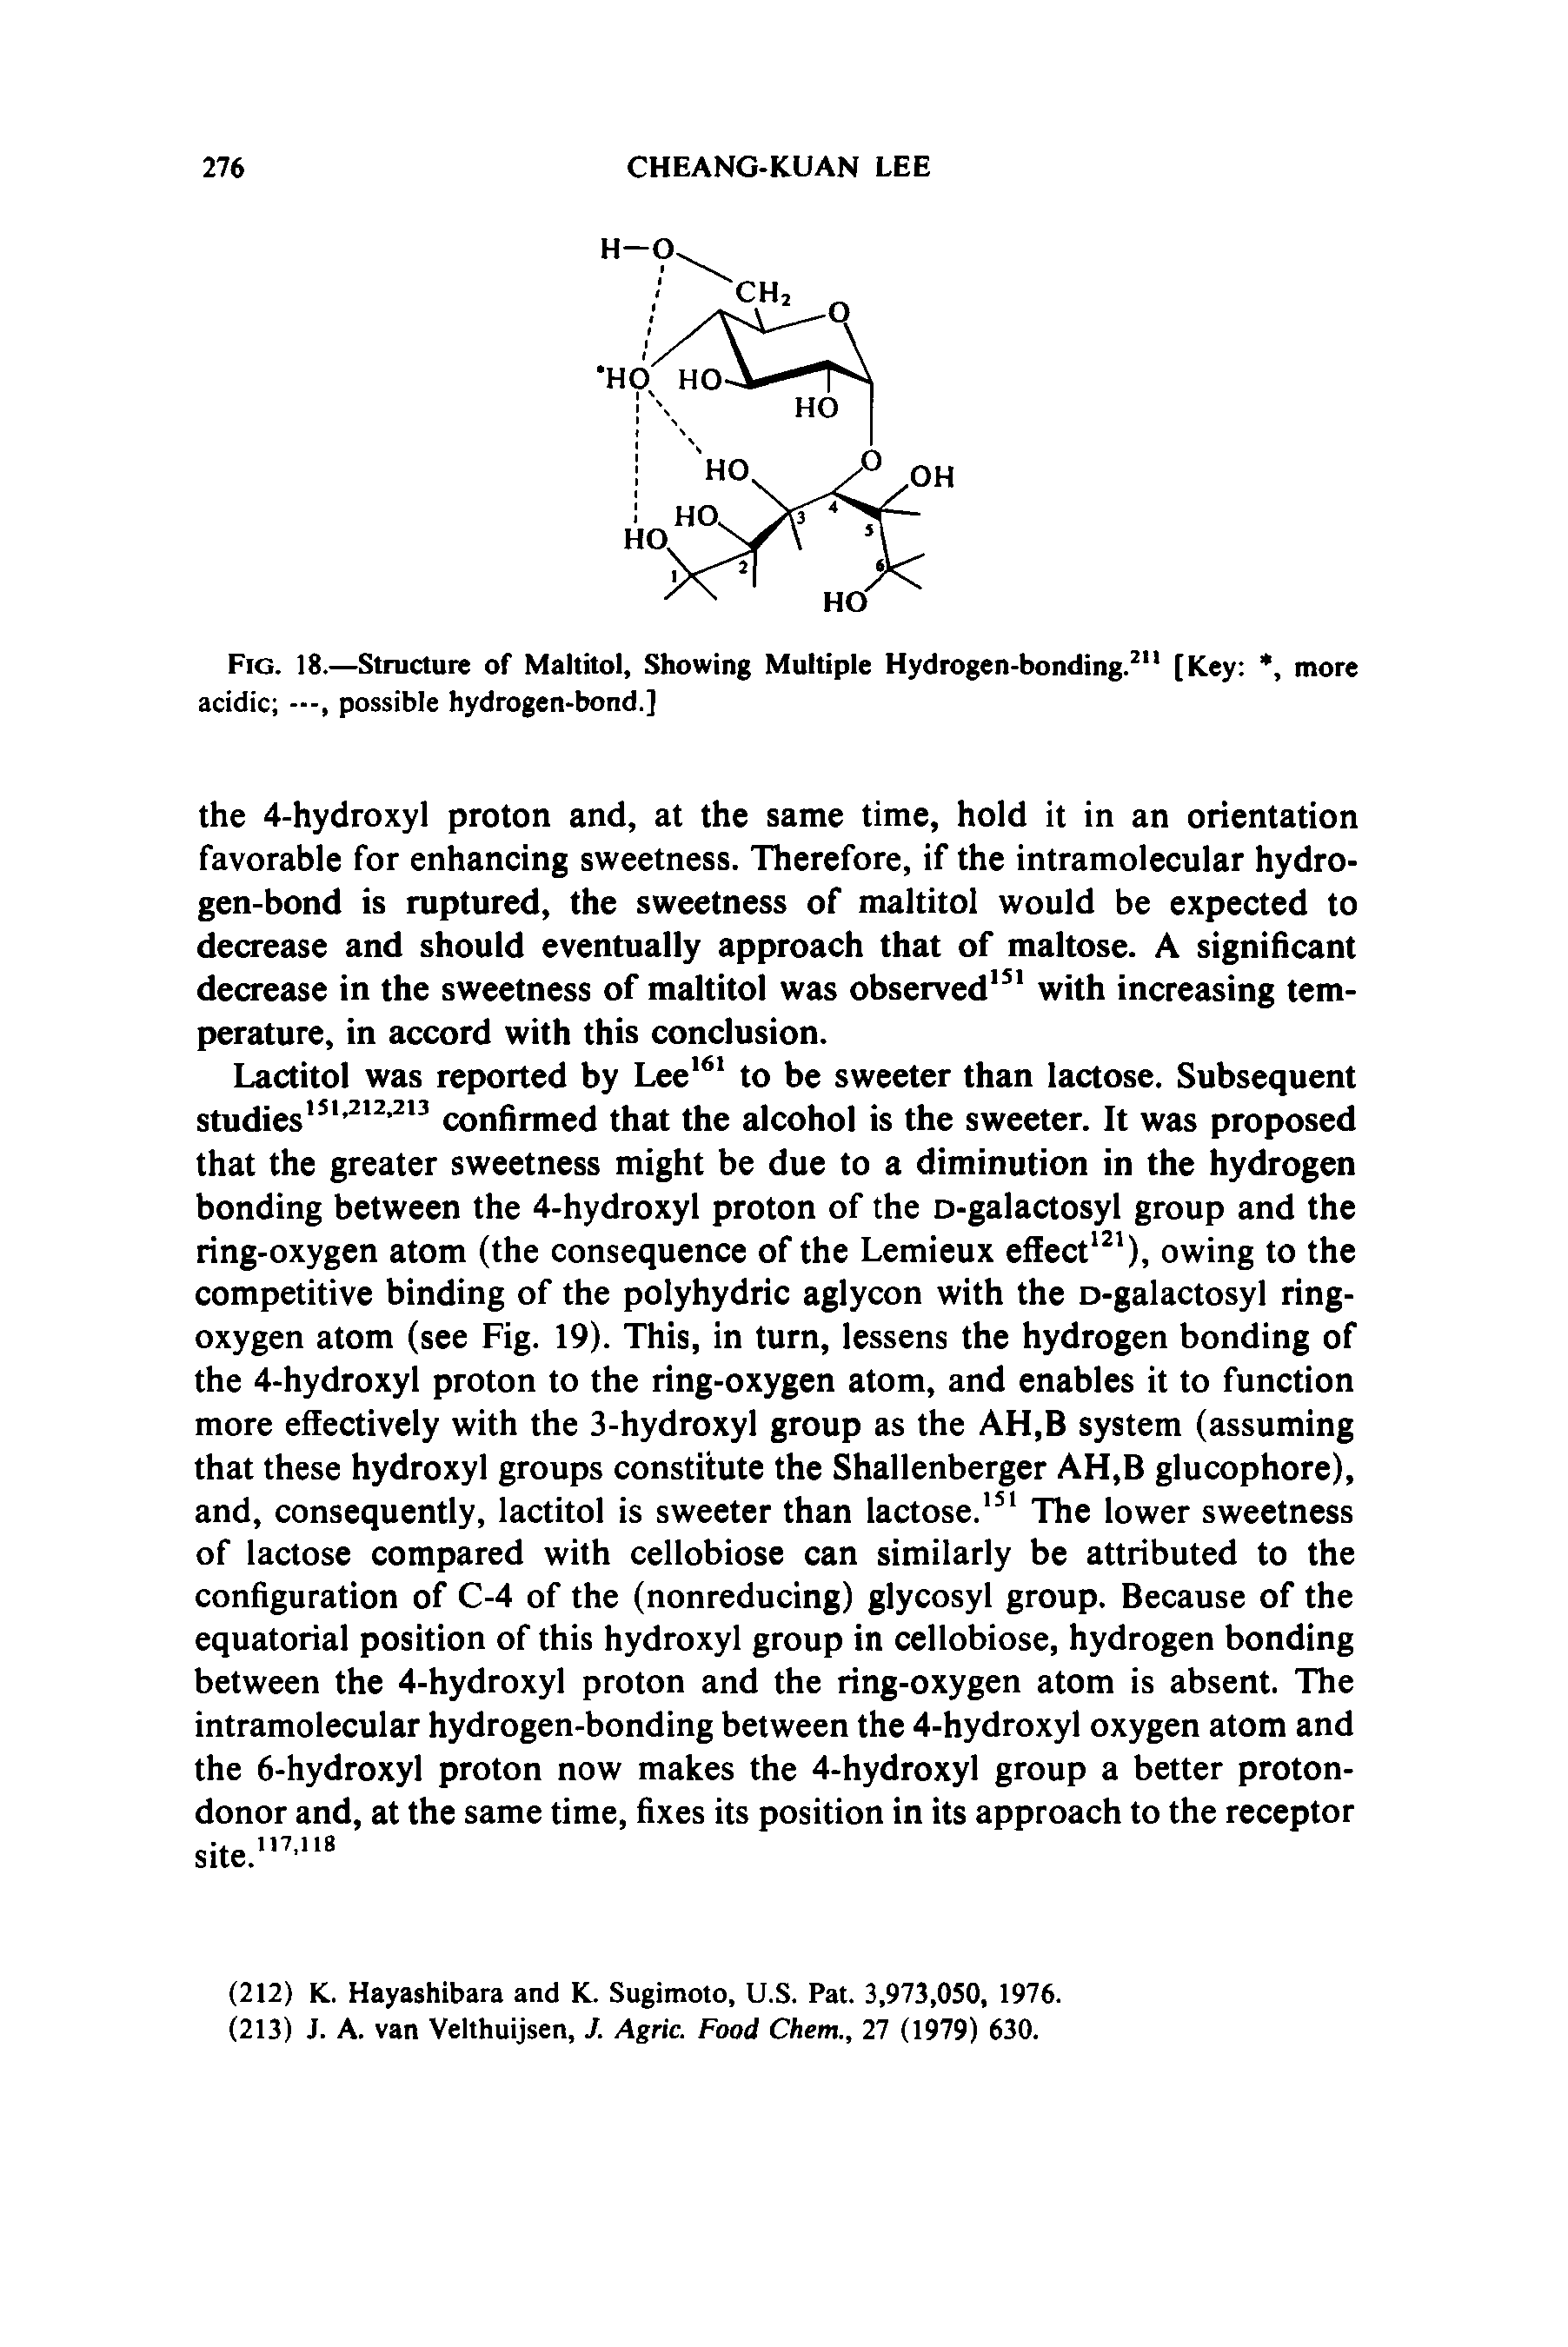 Fig. 18.—Structure of Maltitol, Showing Multiple Hydrogen-bonding. " [Key , more acidic possible hydrogen-bond.]...